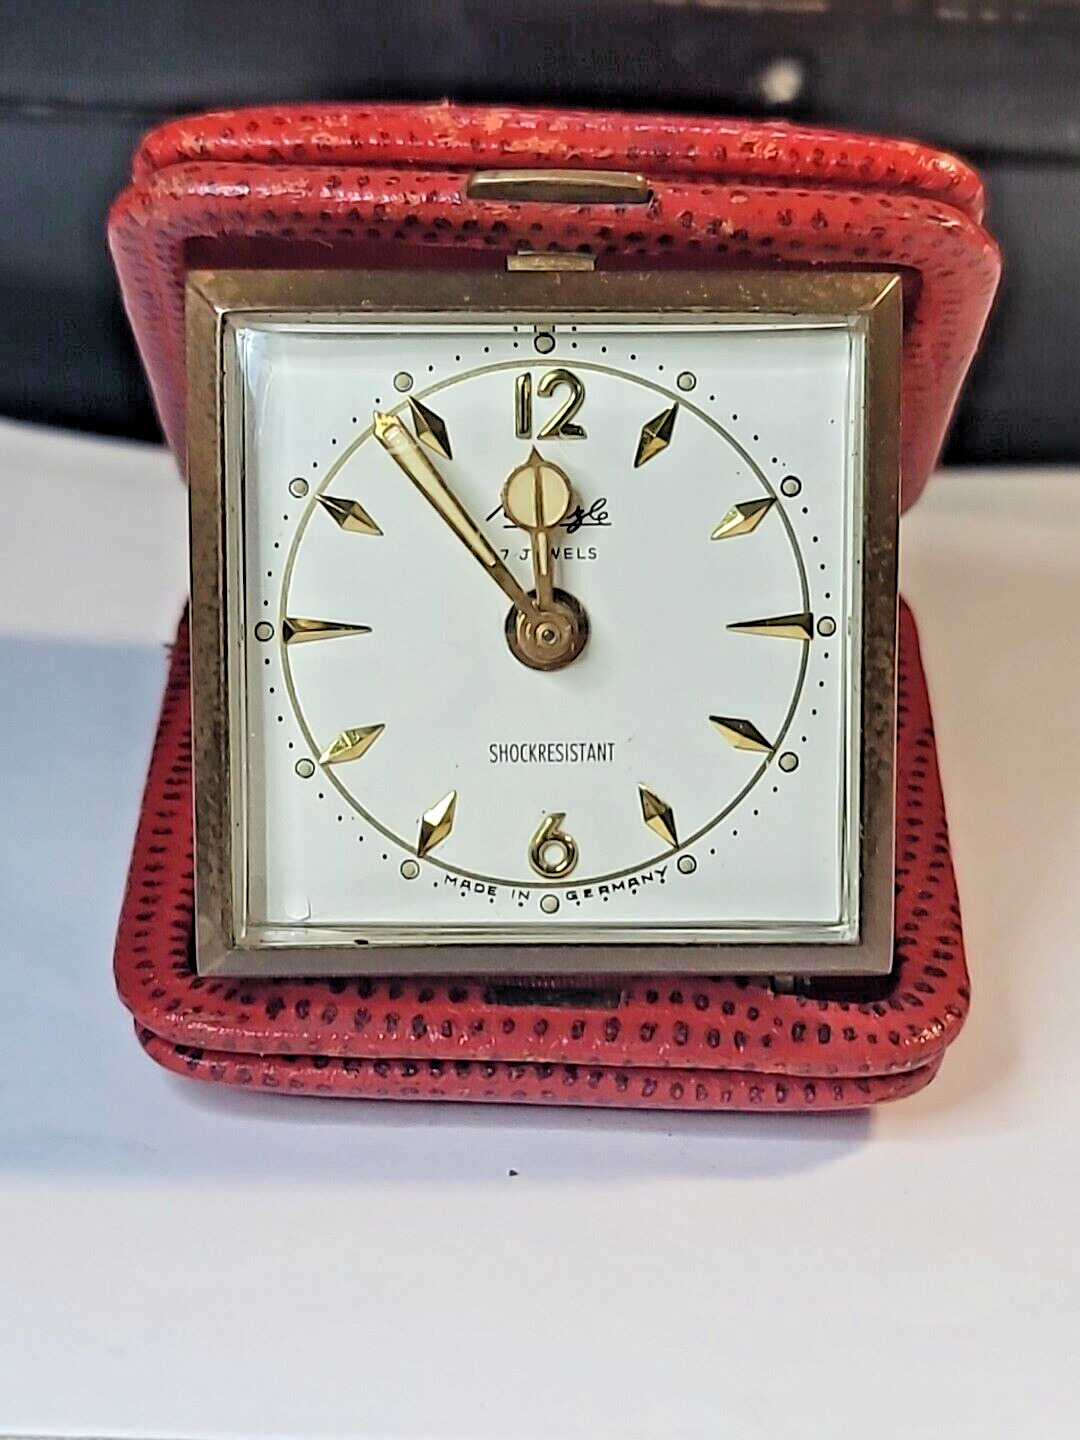 Vintage Kienzle Red Travel Alarm Clock 7 Jewels SHOCKRESISTANTKEEPS TIME/ALARMS